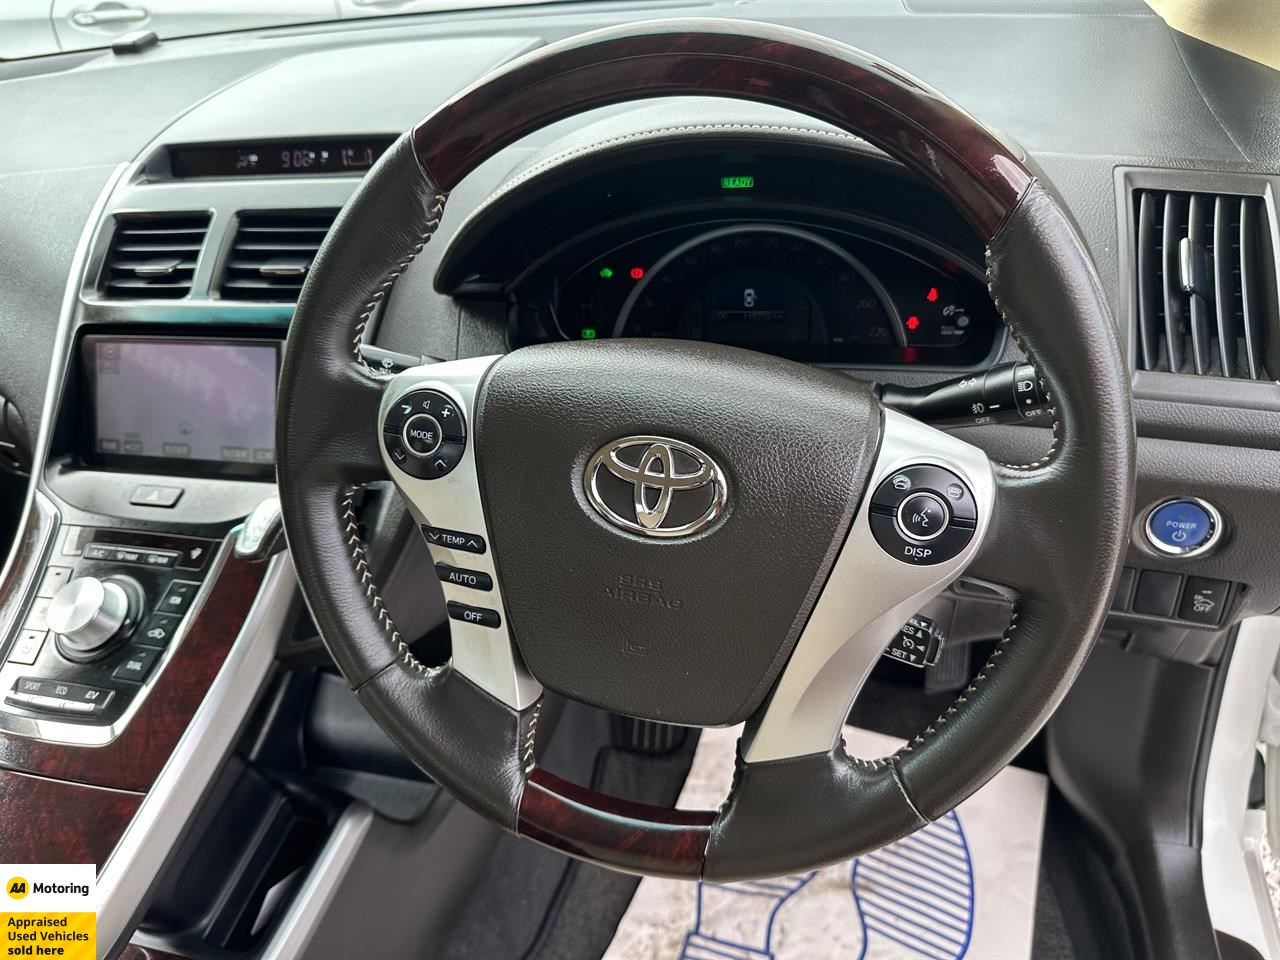 2013 Toyota Sai